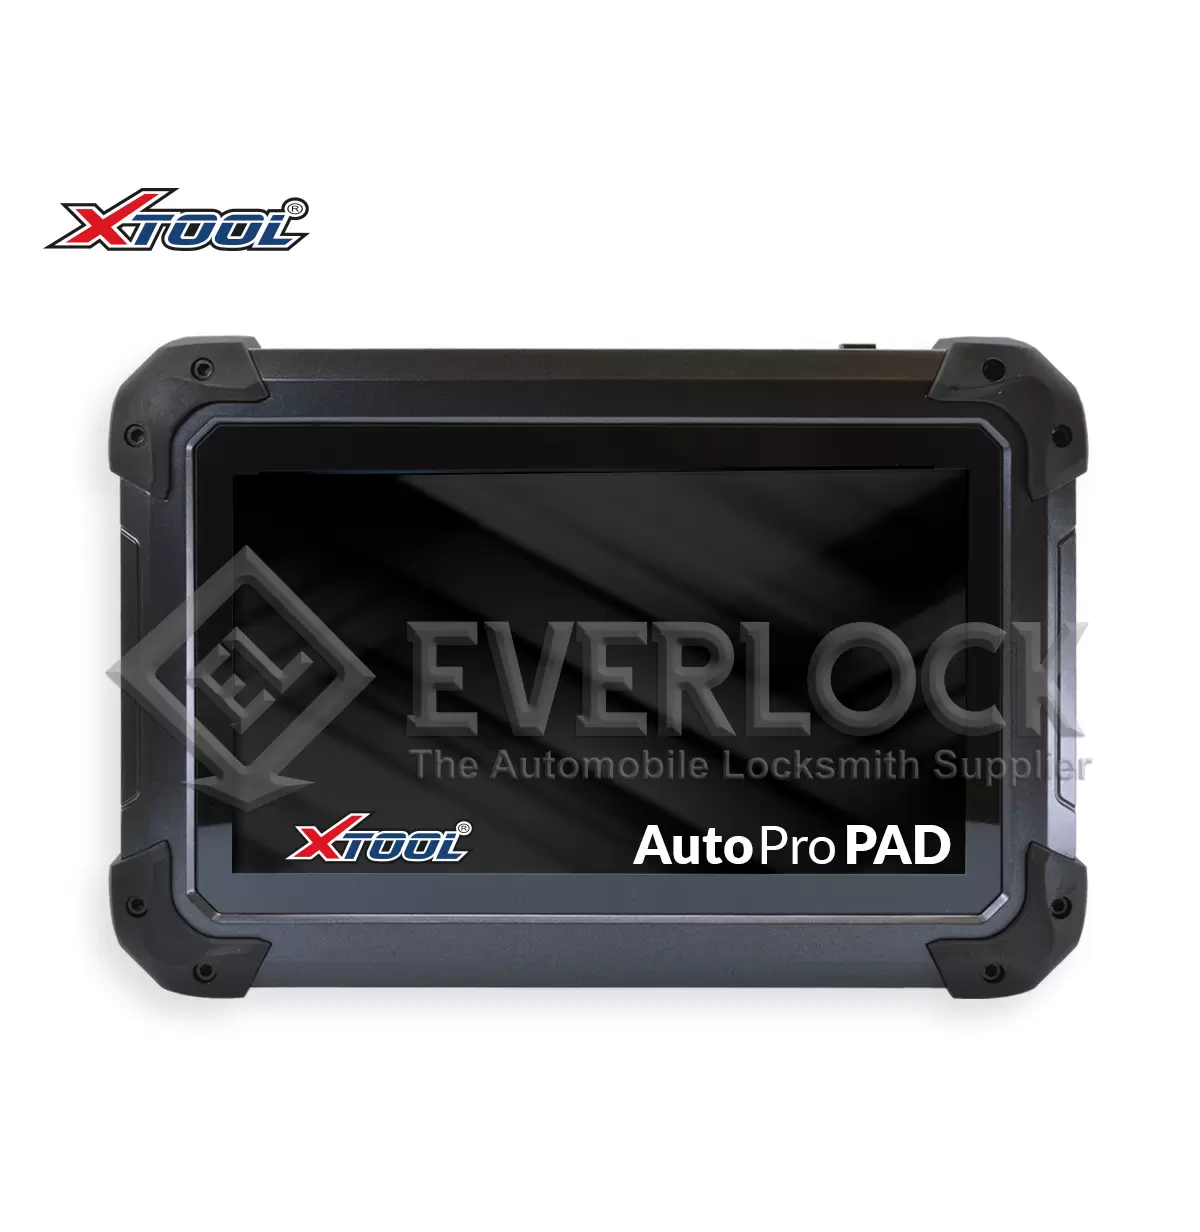 AutoPro Pad Basic model